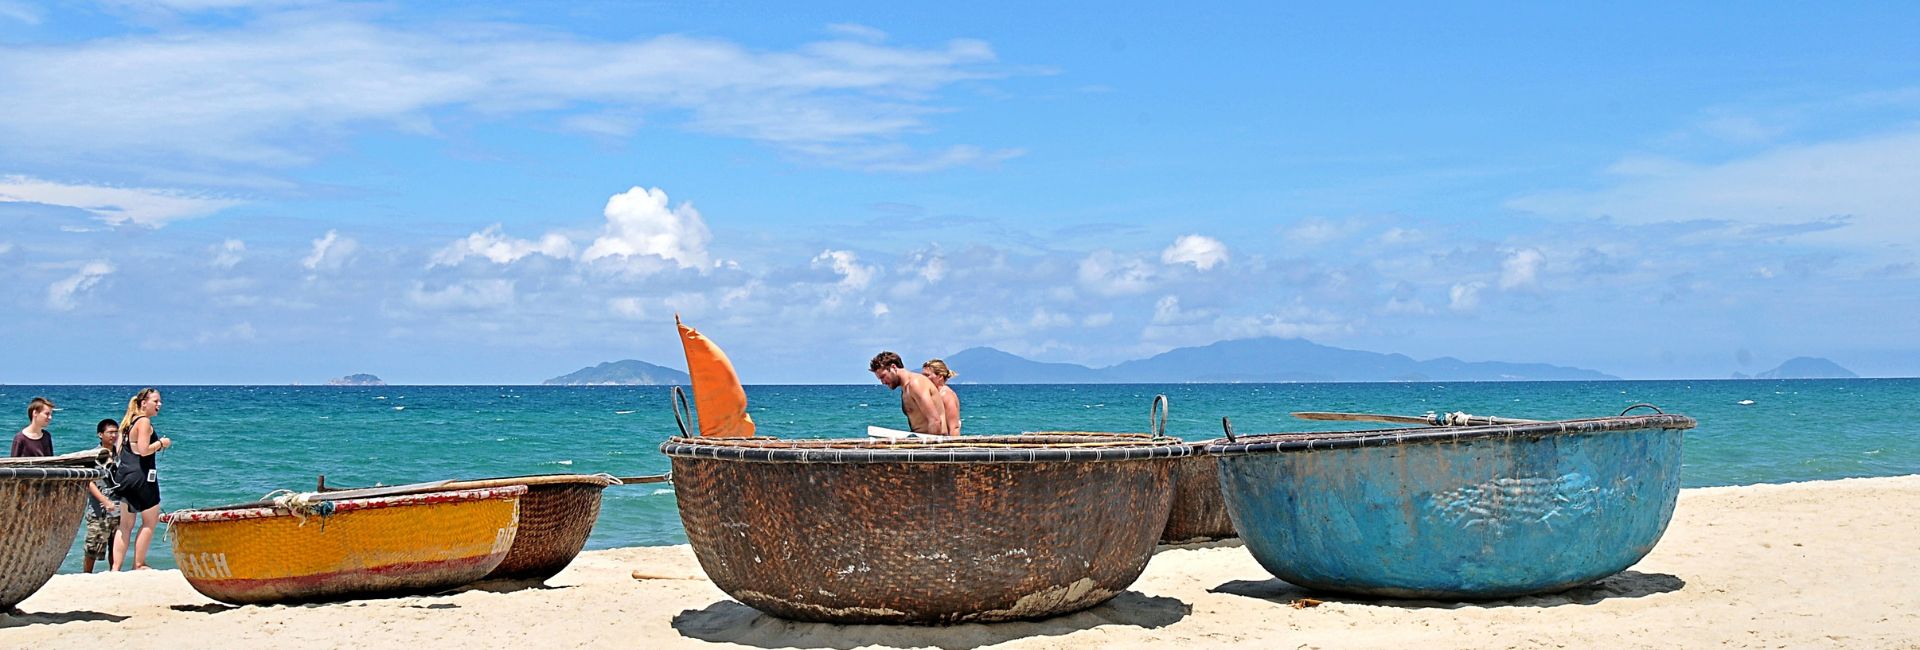 An Bang Beach Hoi An Vietnam: Is it worth visiting?